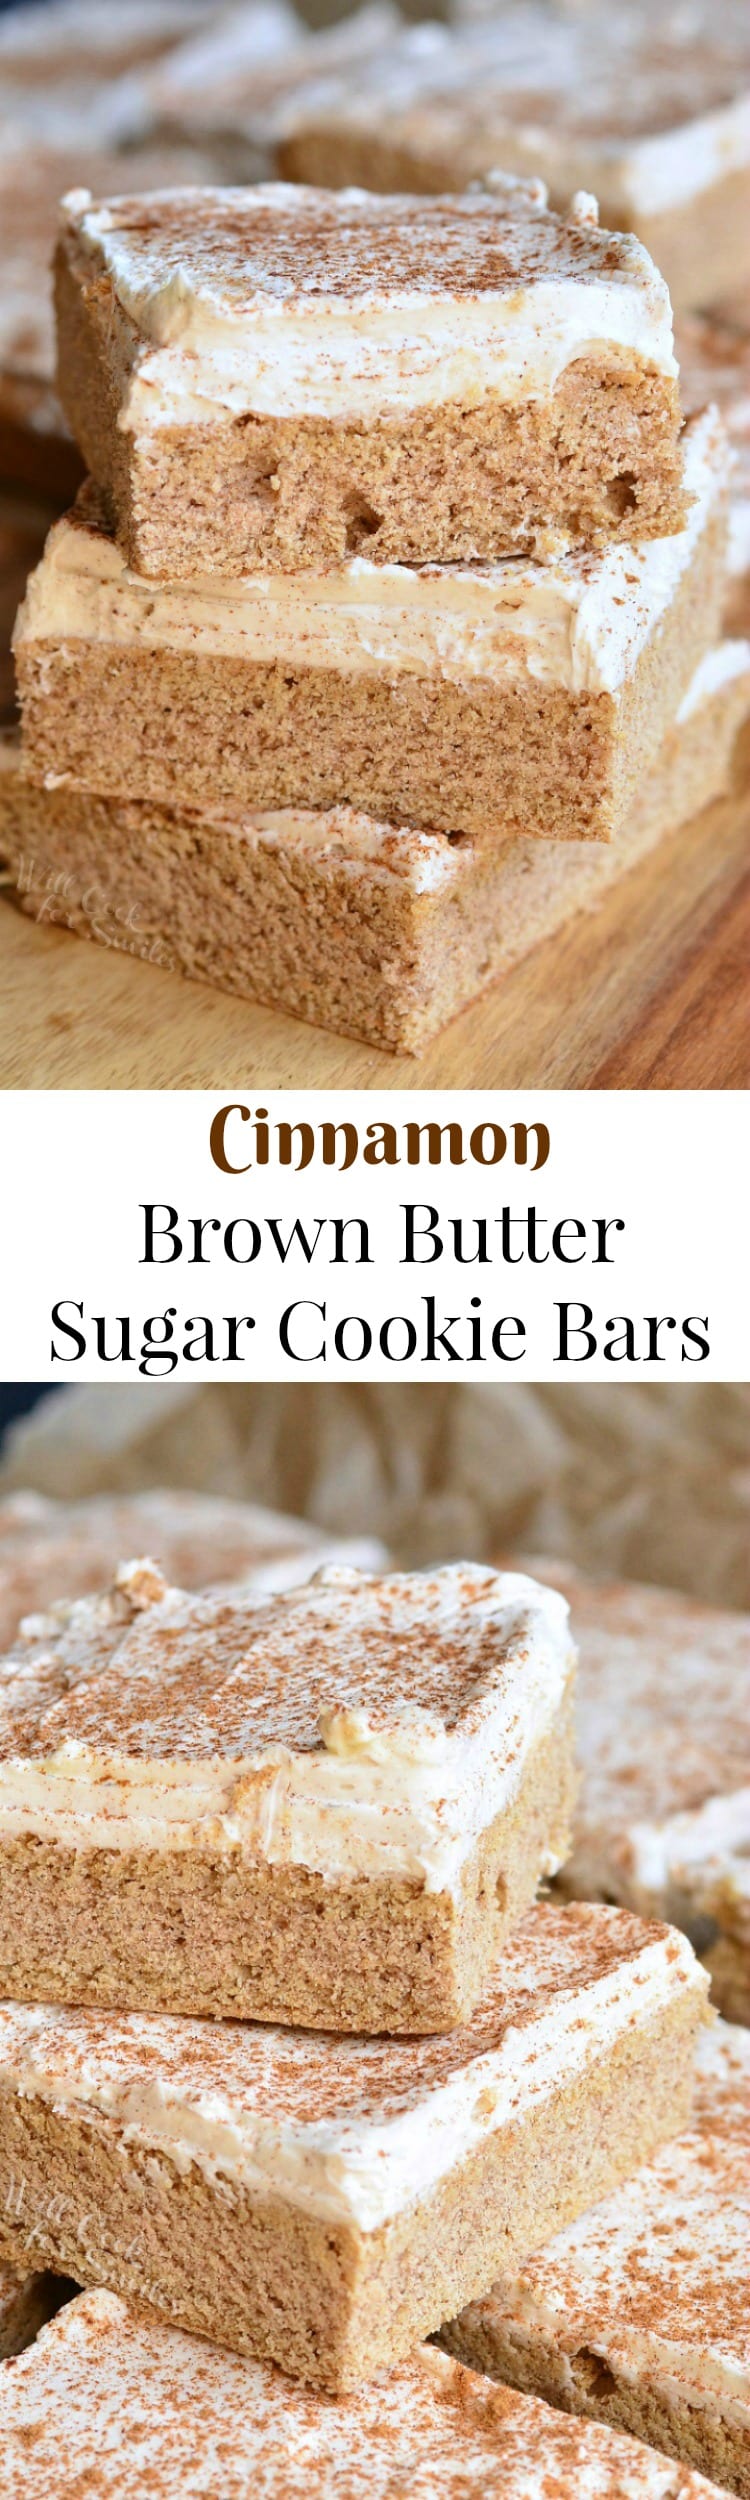 Cinnamon Brown Butter Sugar Cookie Bars collage 